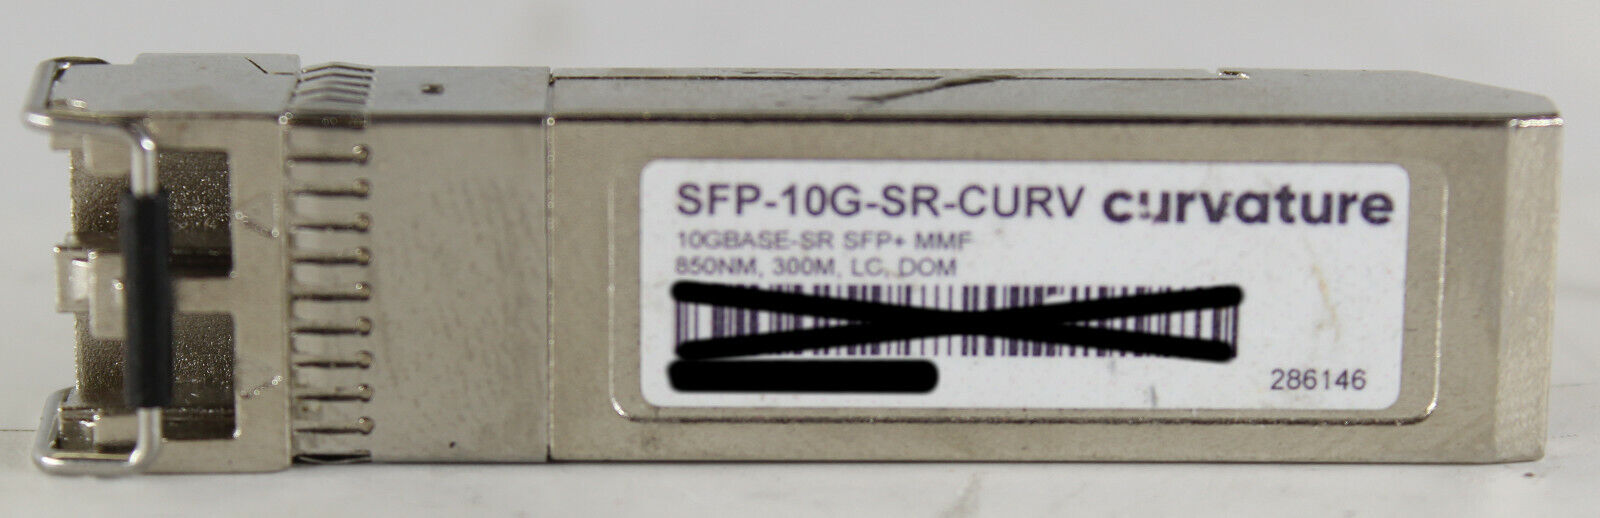 Curvature SFP-10G-RS-CURV 10GBASE-SR SFP+ MMF 850nm 300M LC Transceiver Module